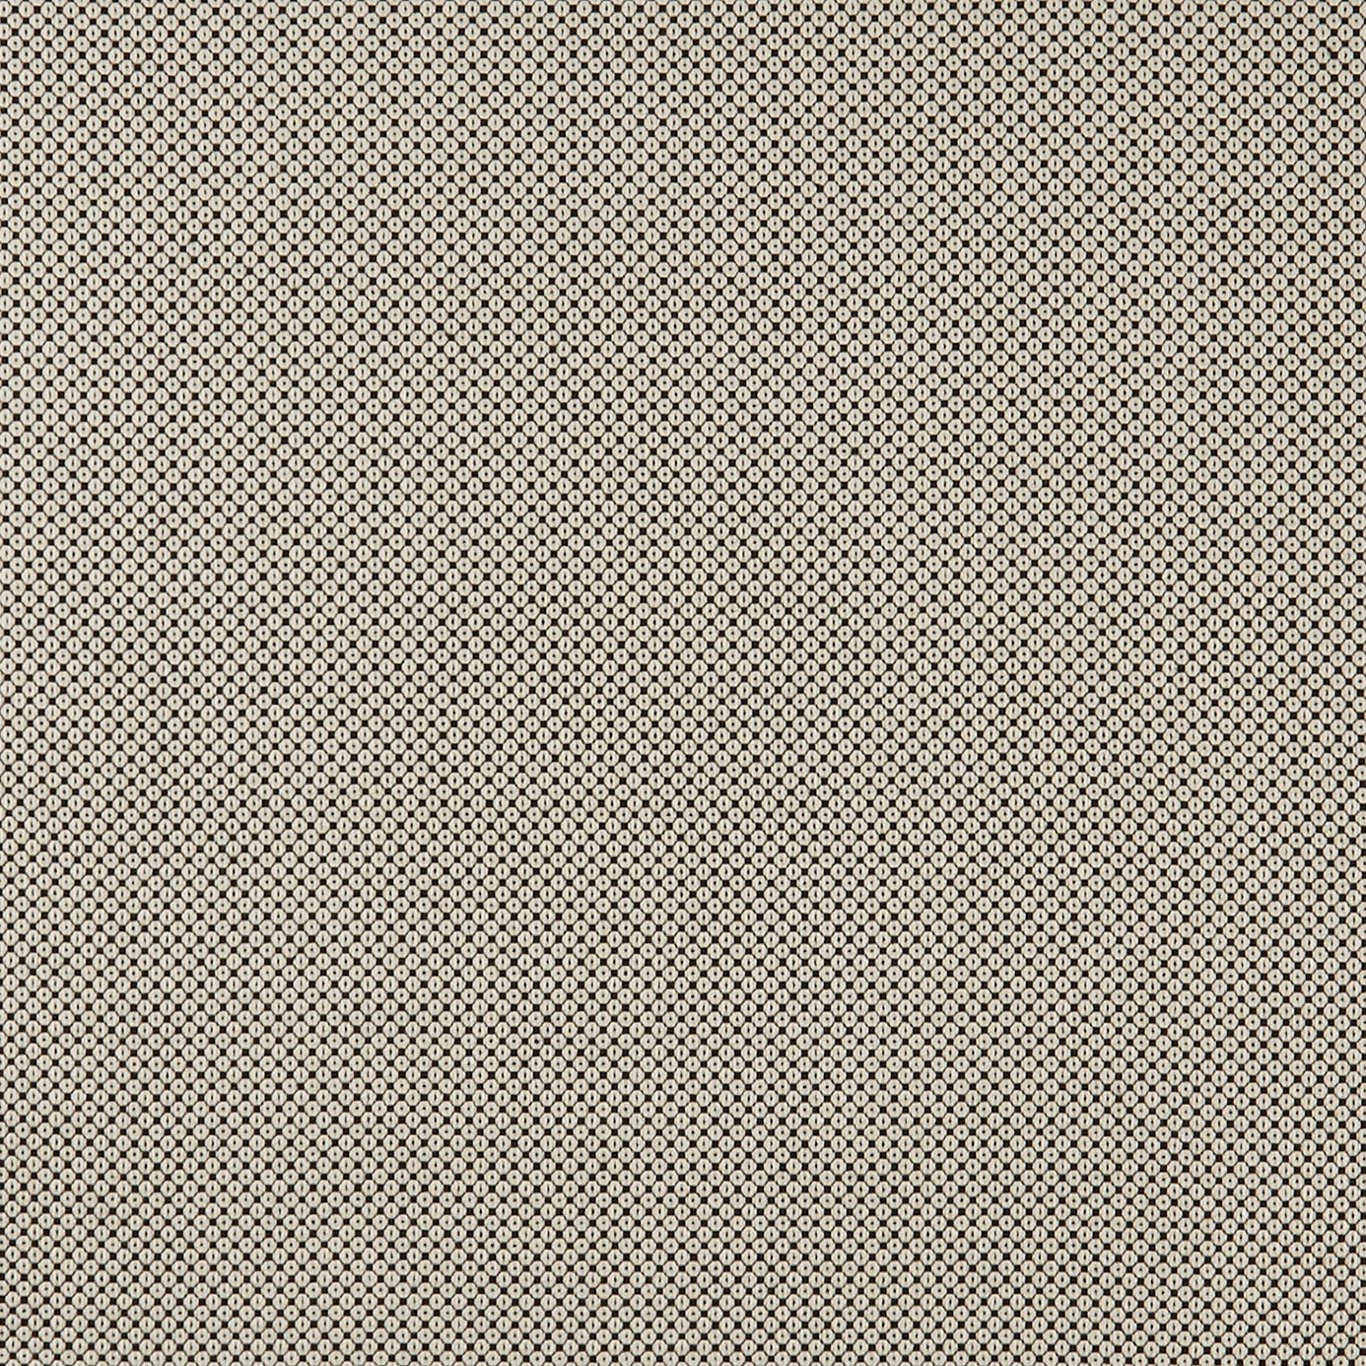 BW1033 Black/White Fabric by CNC